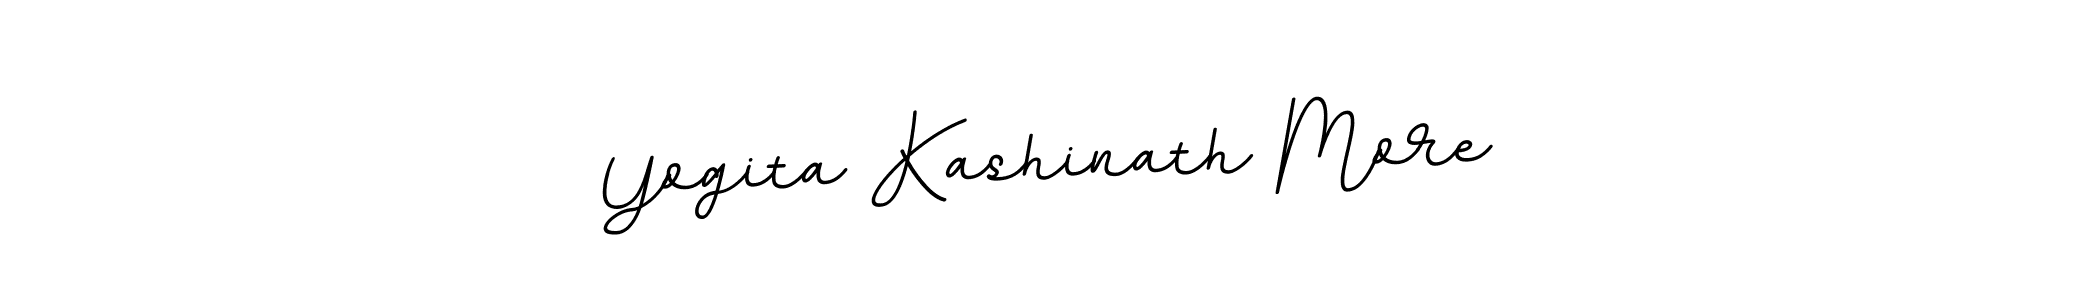 Yogita Kashinath More stylish signature style. Best Handwritten Sign (BallpointsItalic-DORy9) for my name. Handwritten Signature Collection Ideas for my name Yogita Kashinath More. Yogita Kashinath More signature style 11 images and pictures png